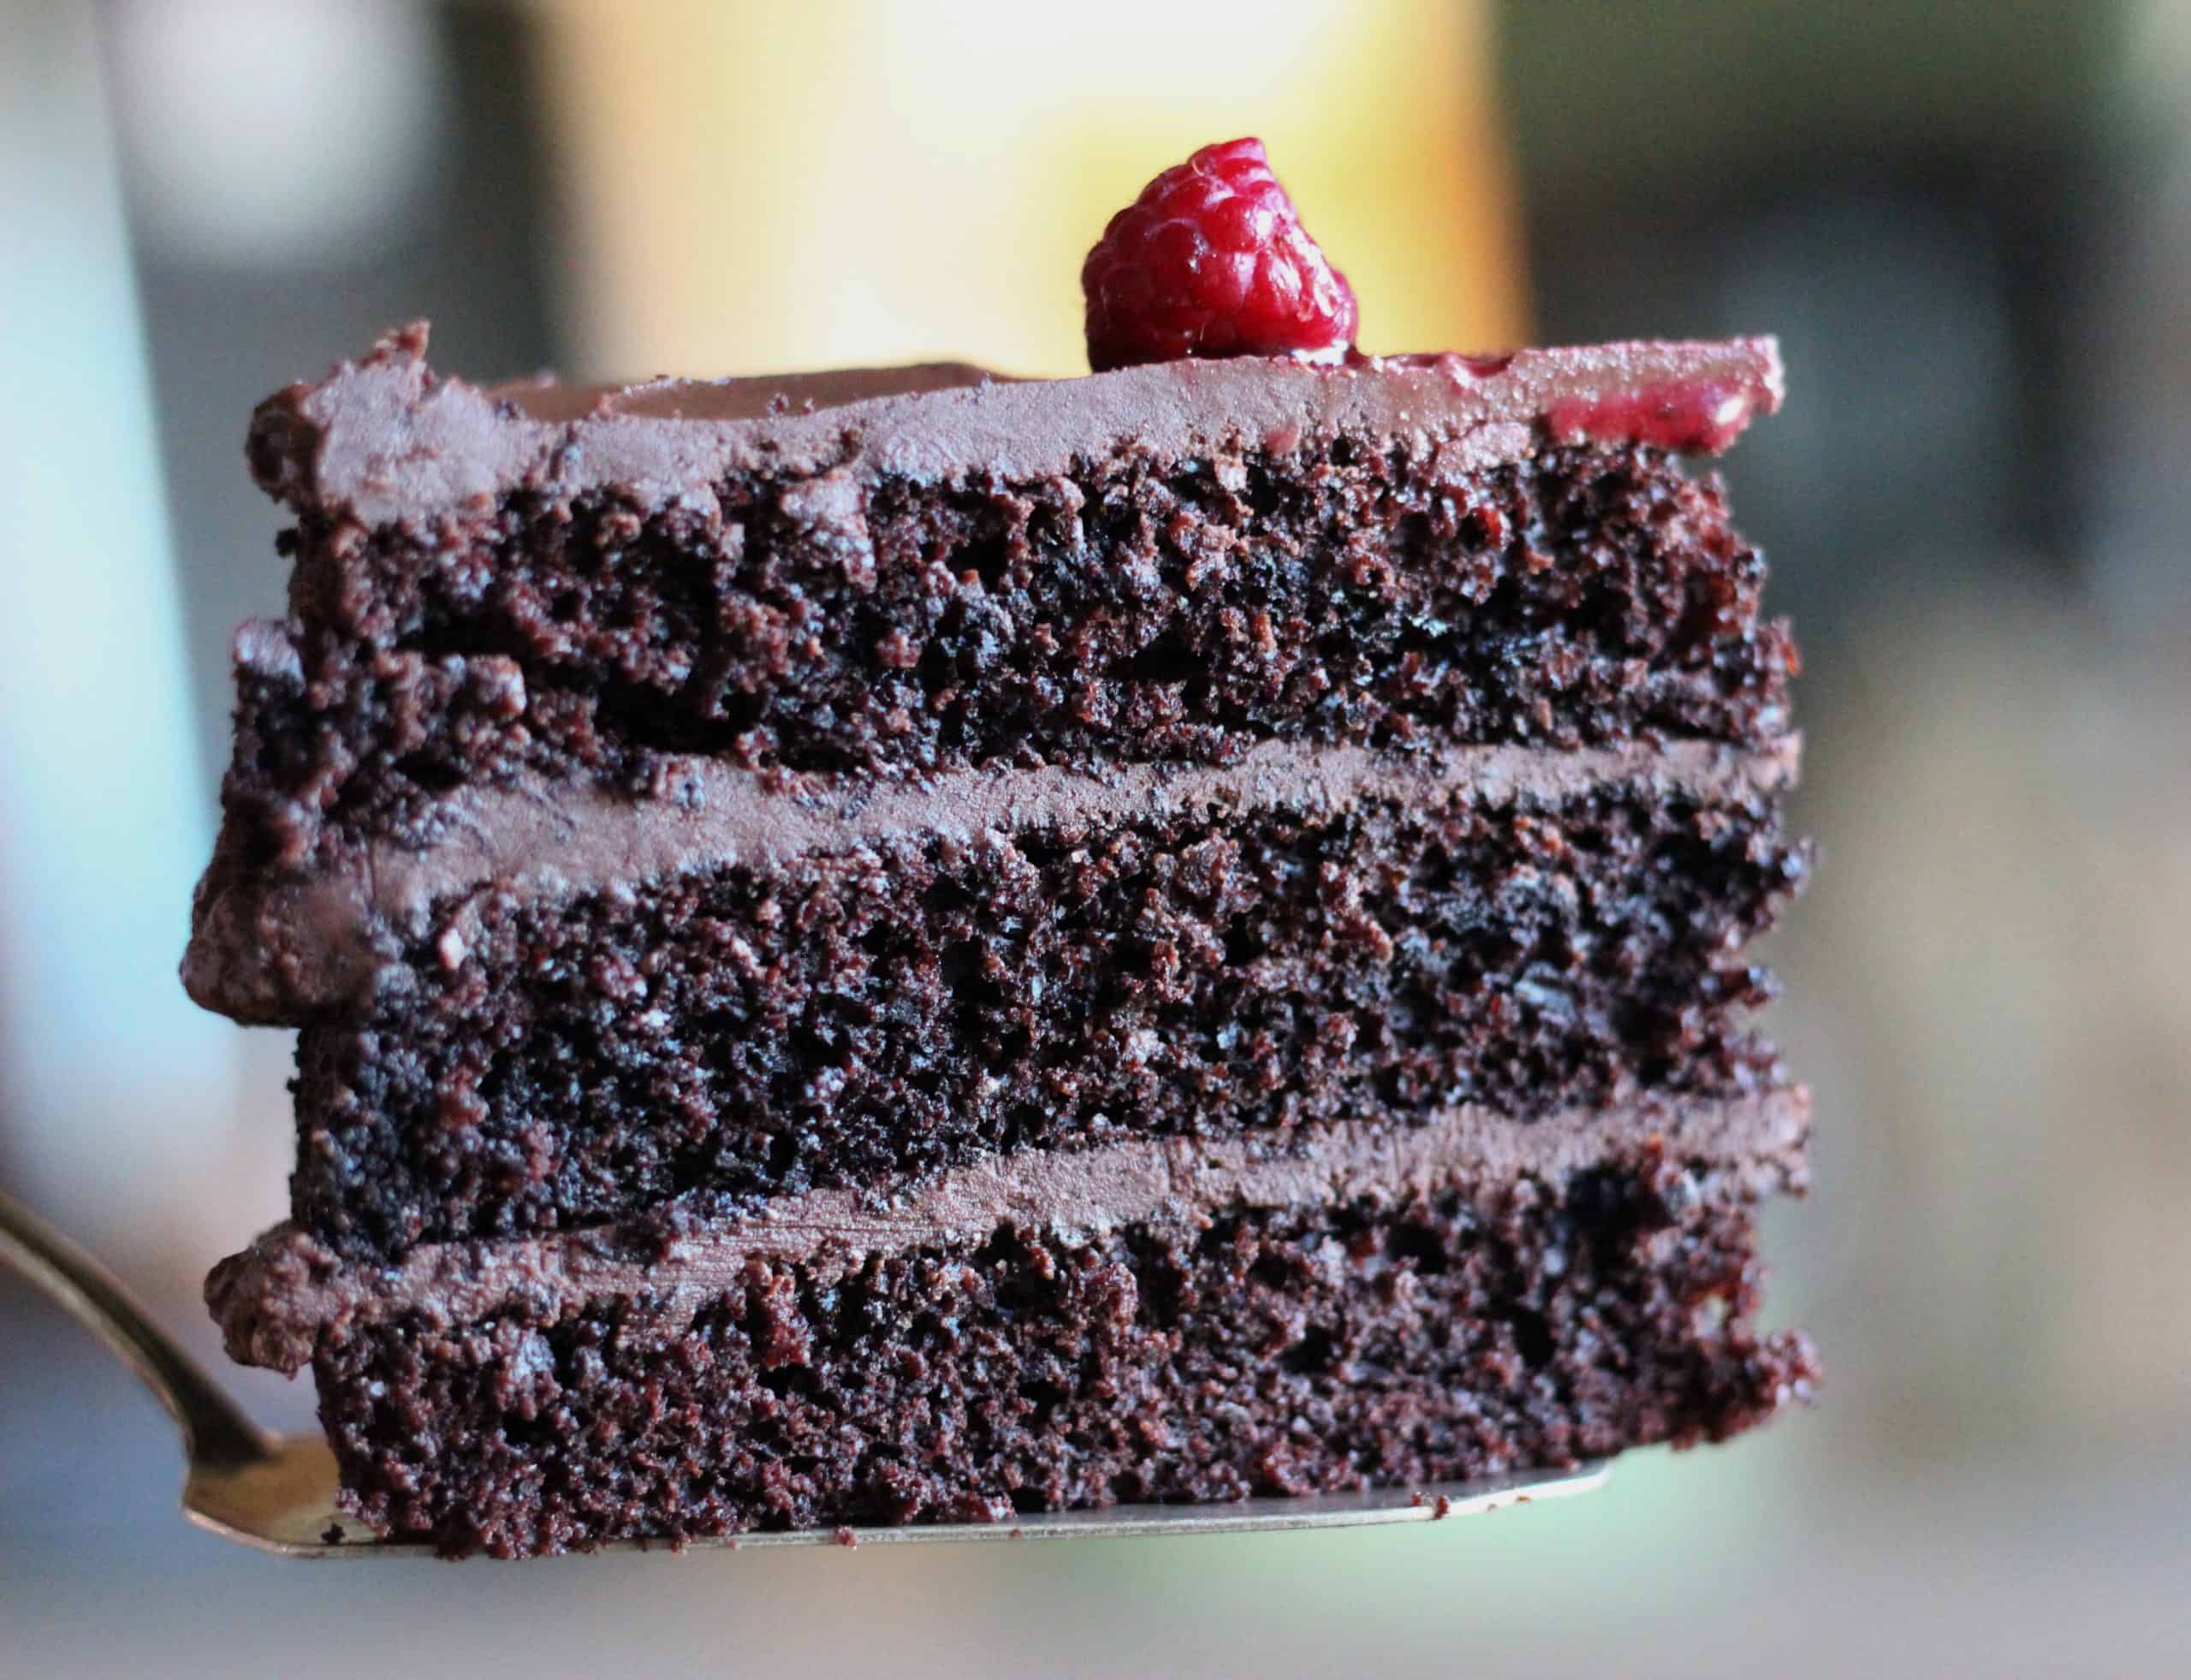 slice of sourdough discard chocolate sponge cake, with dark chocolate ganache